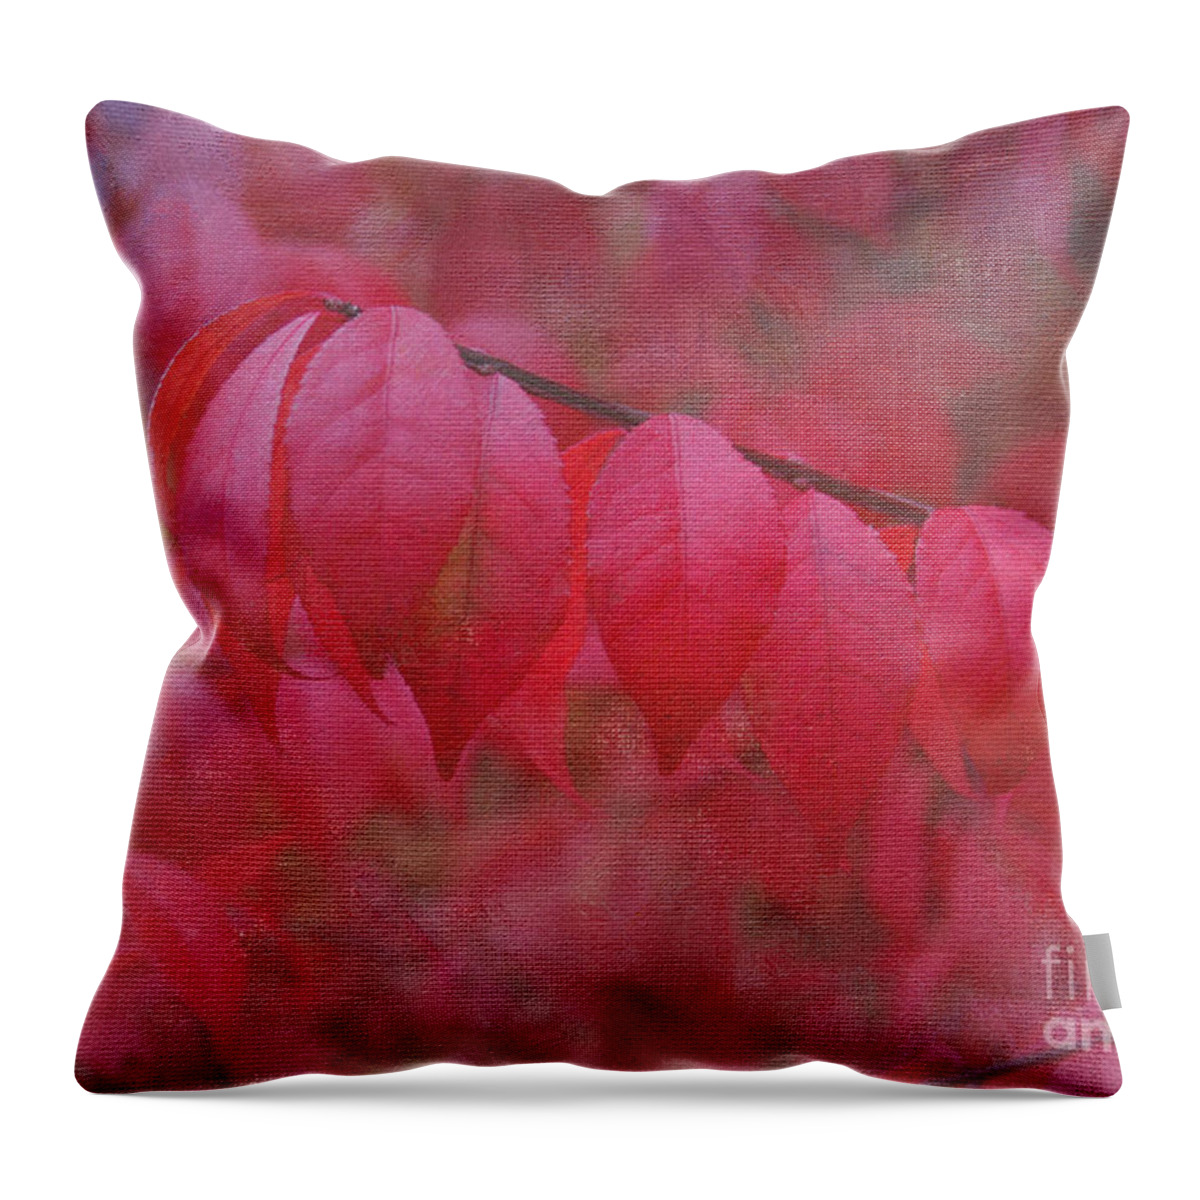 Autumn Throw Pillow featuring the photograph Autumn Glory by Jayne Carney